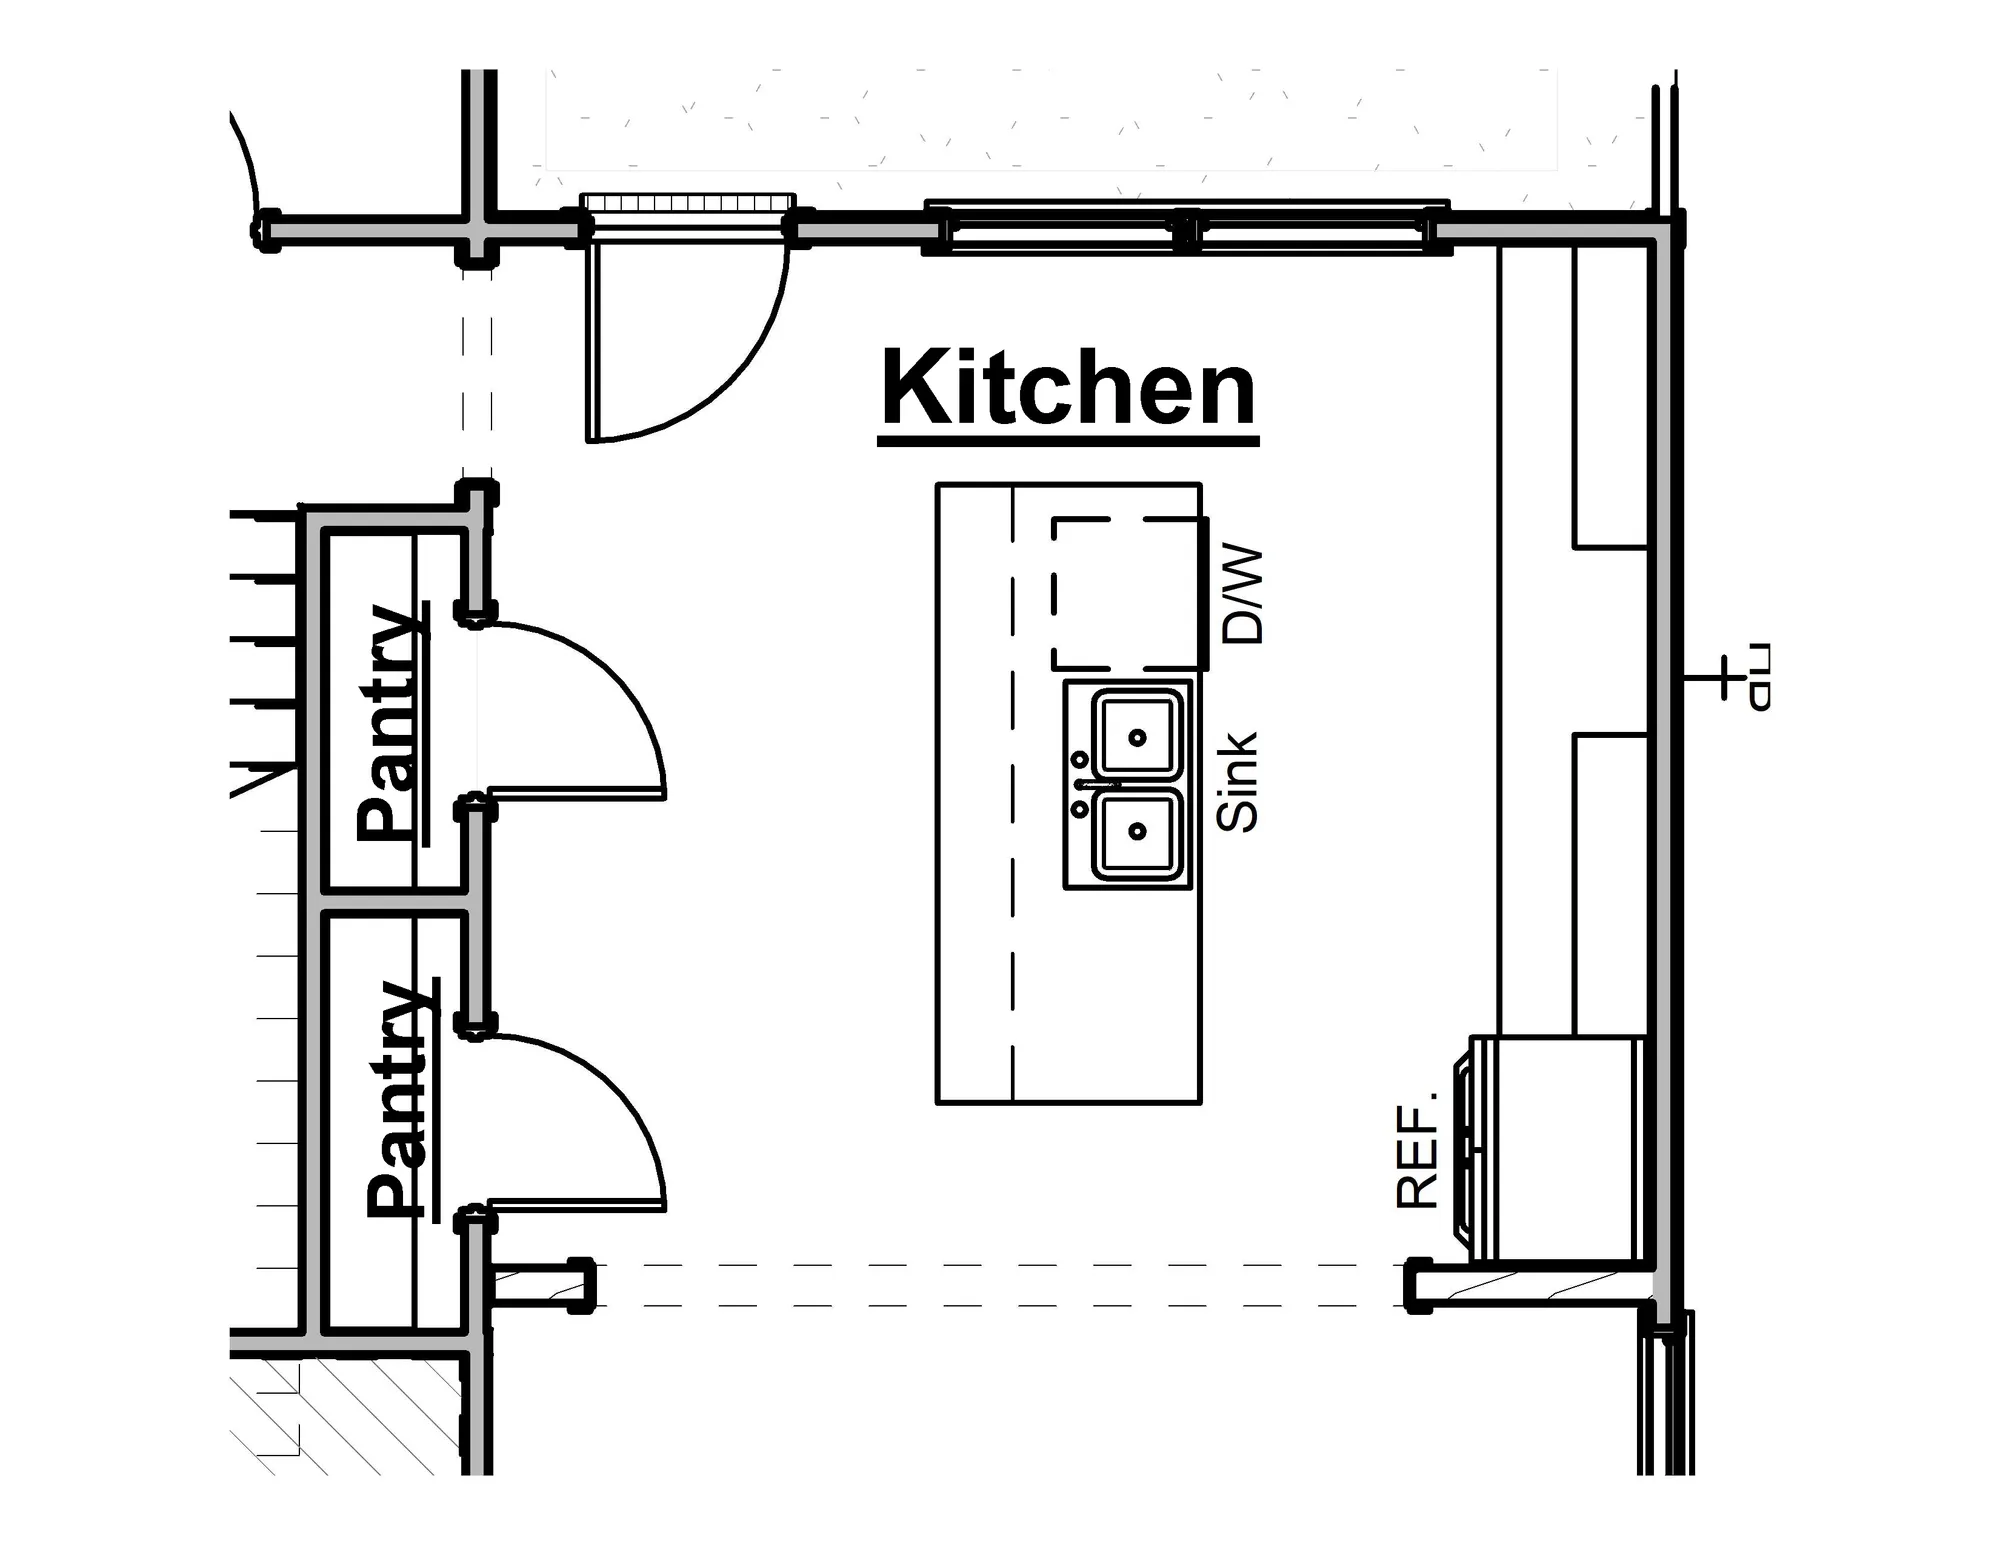 Kitchen - Larger Pantry Option - undefined